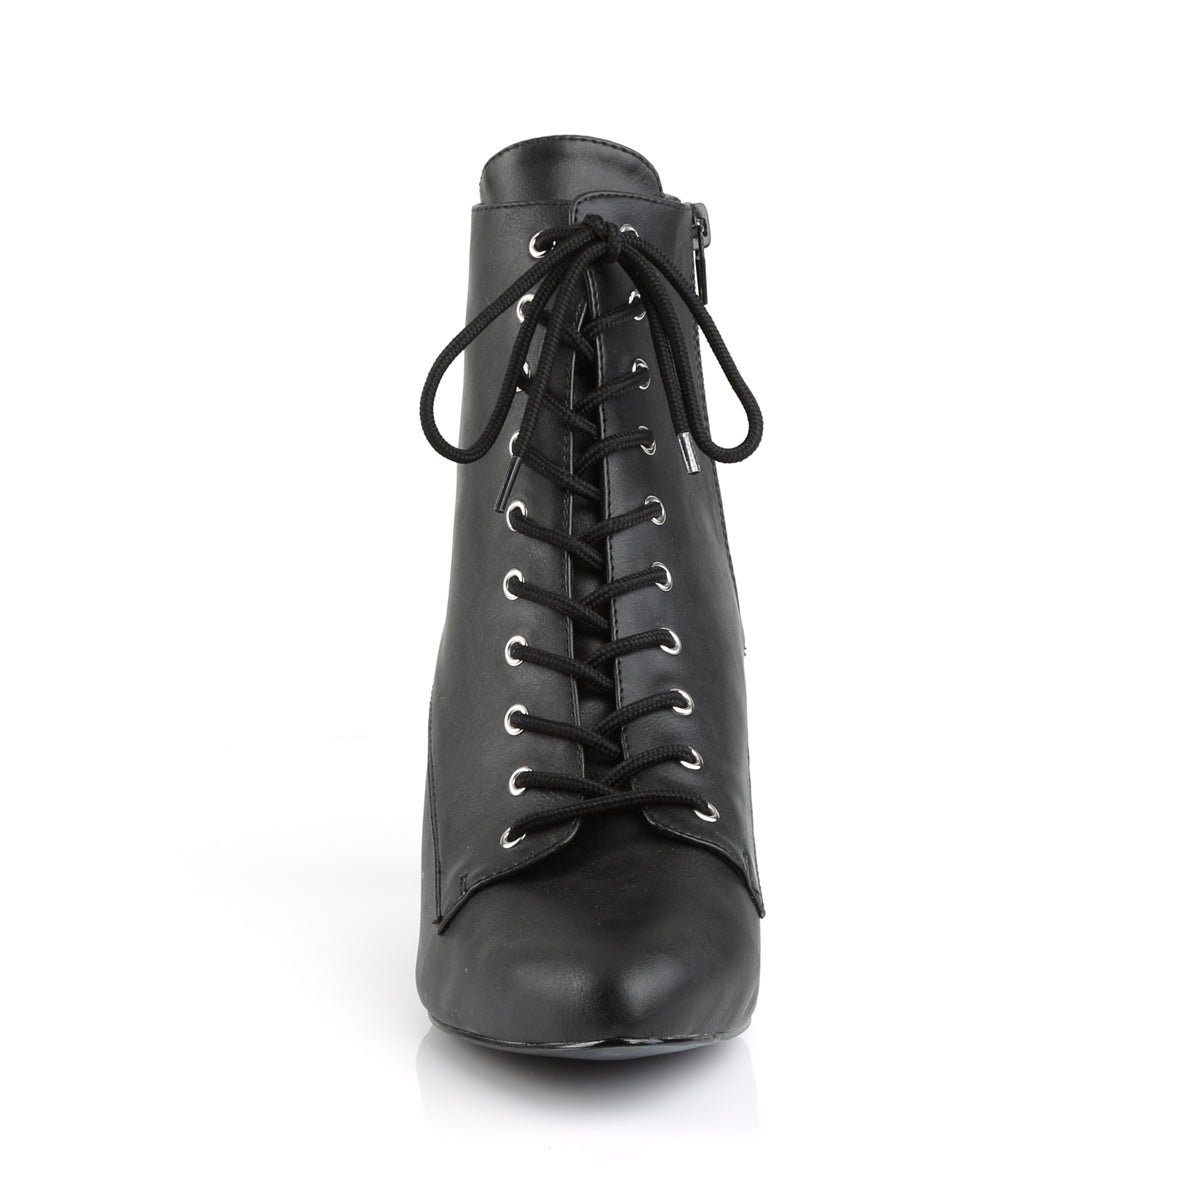 DIVINE-1020 Black Ankle Boots